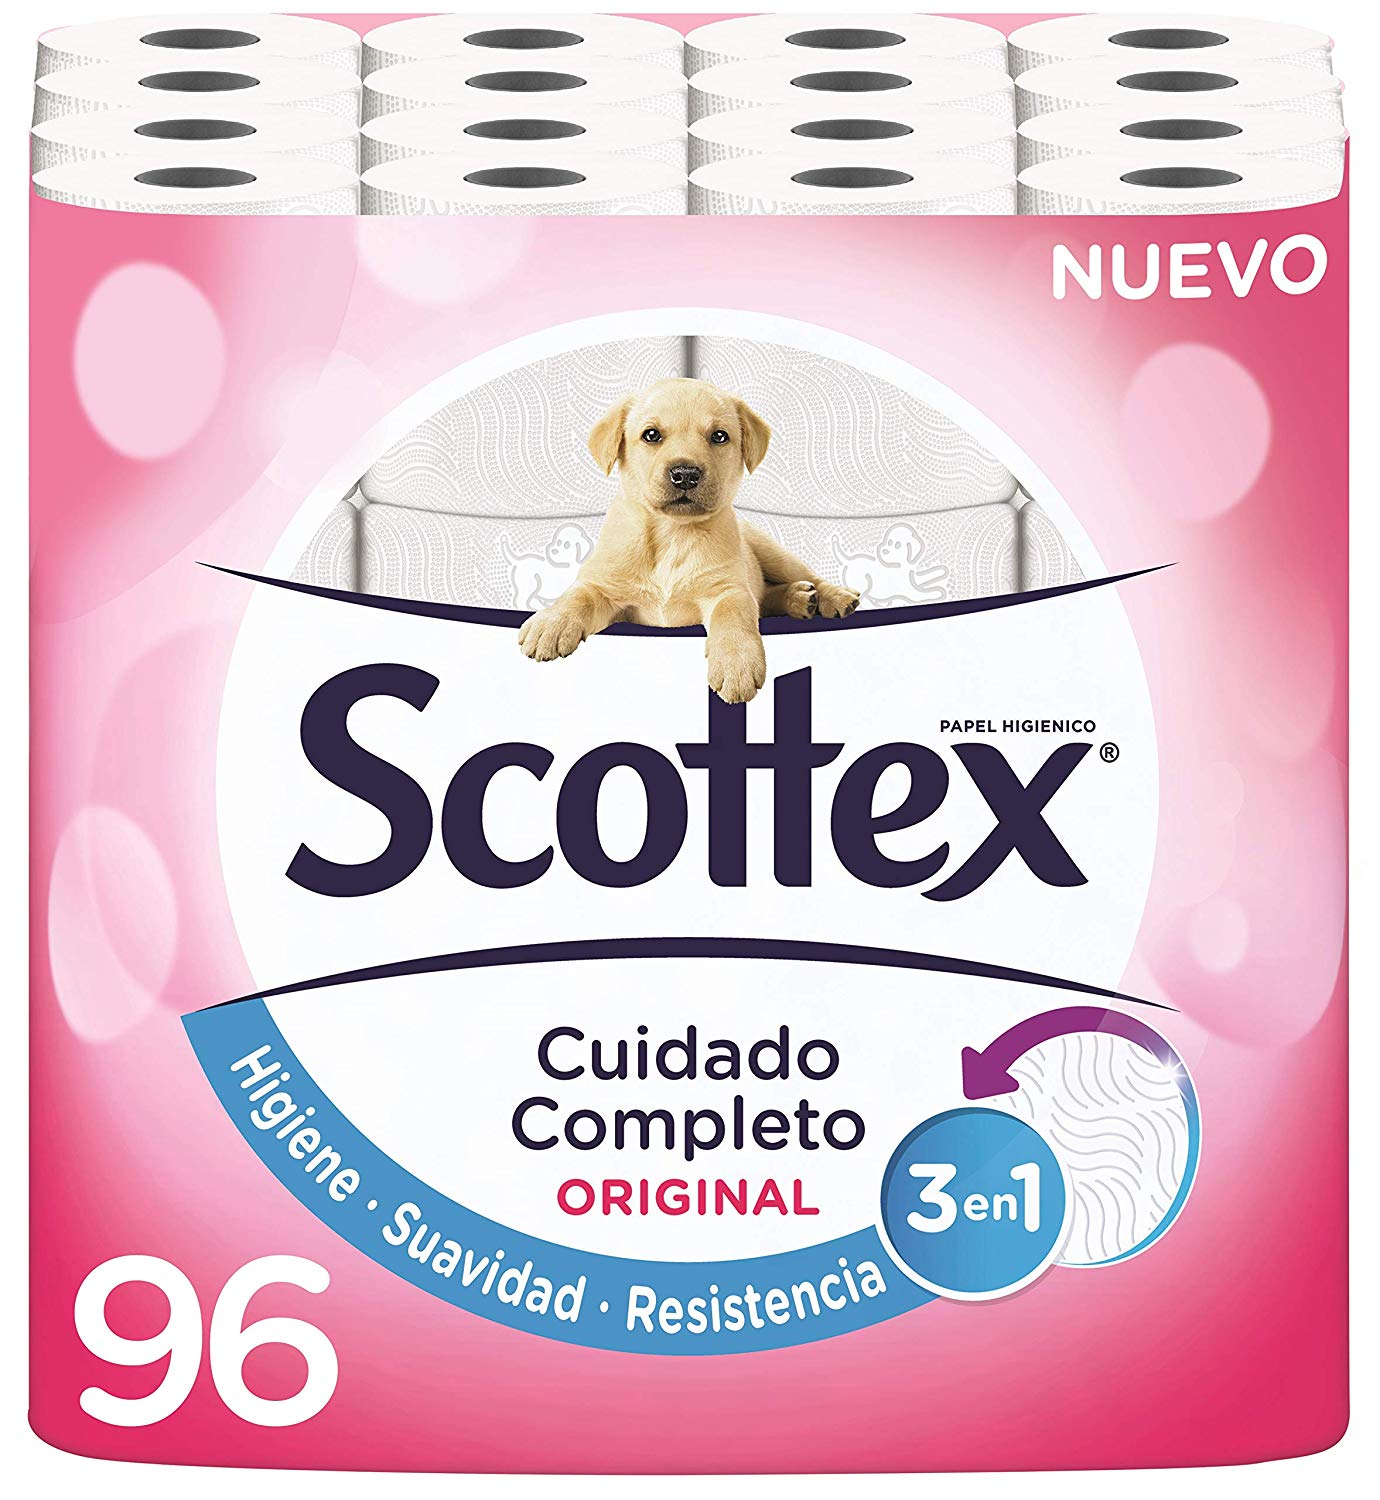 96 Rollos Scottex Original Papel Higiénico solo 19,9€